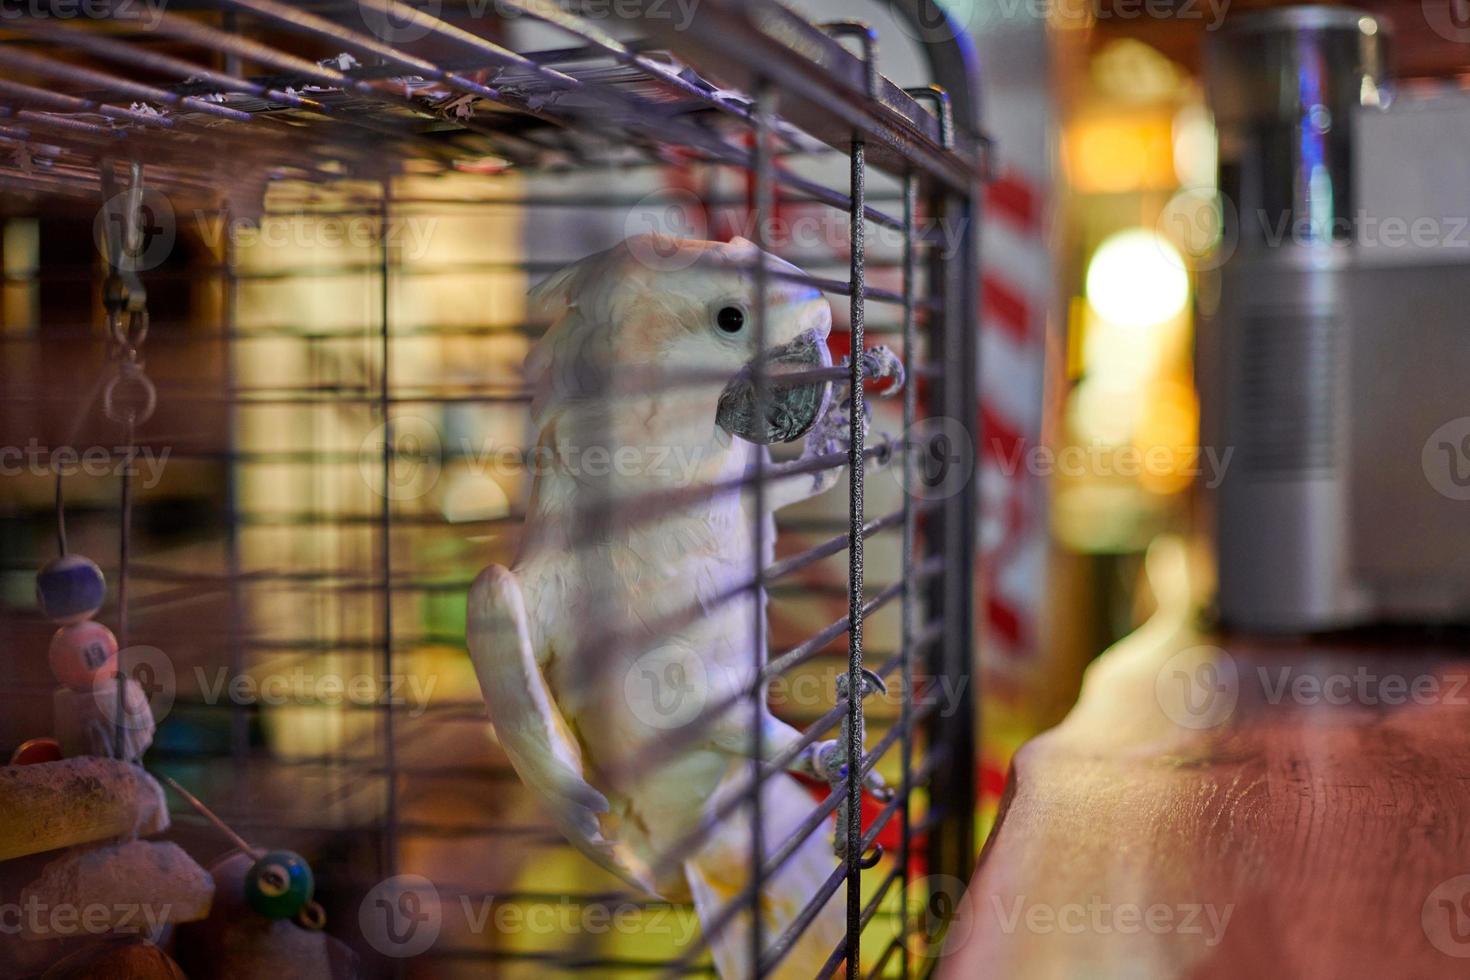 schattige witte cacatua kaketoe papegaai in kooi in café interieur achtergrond, grappige binnenlandse vogel foto